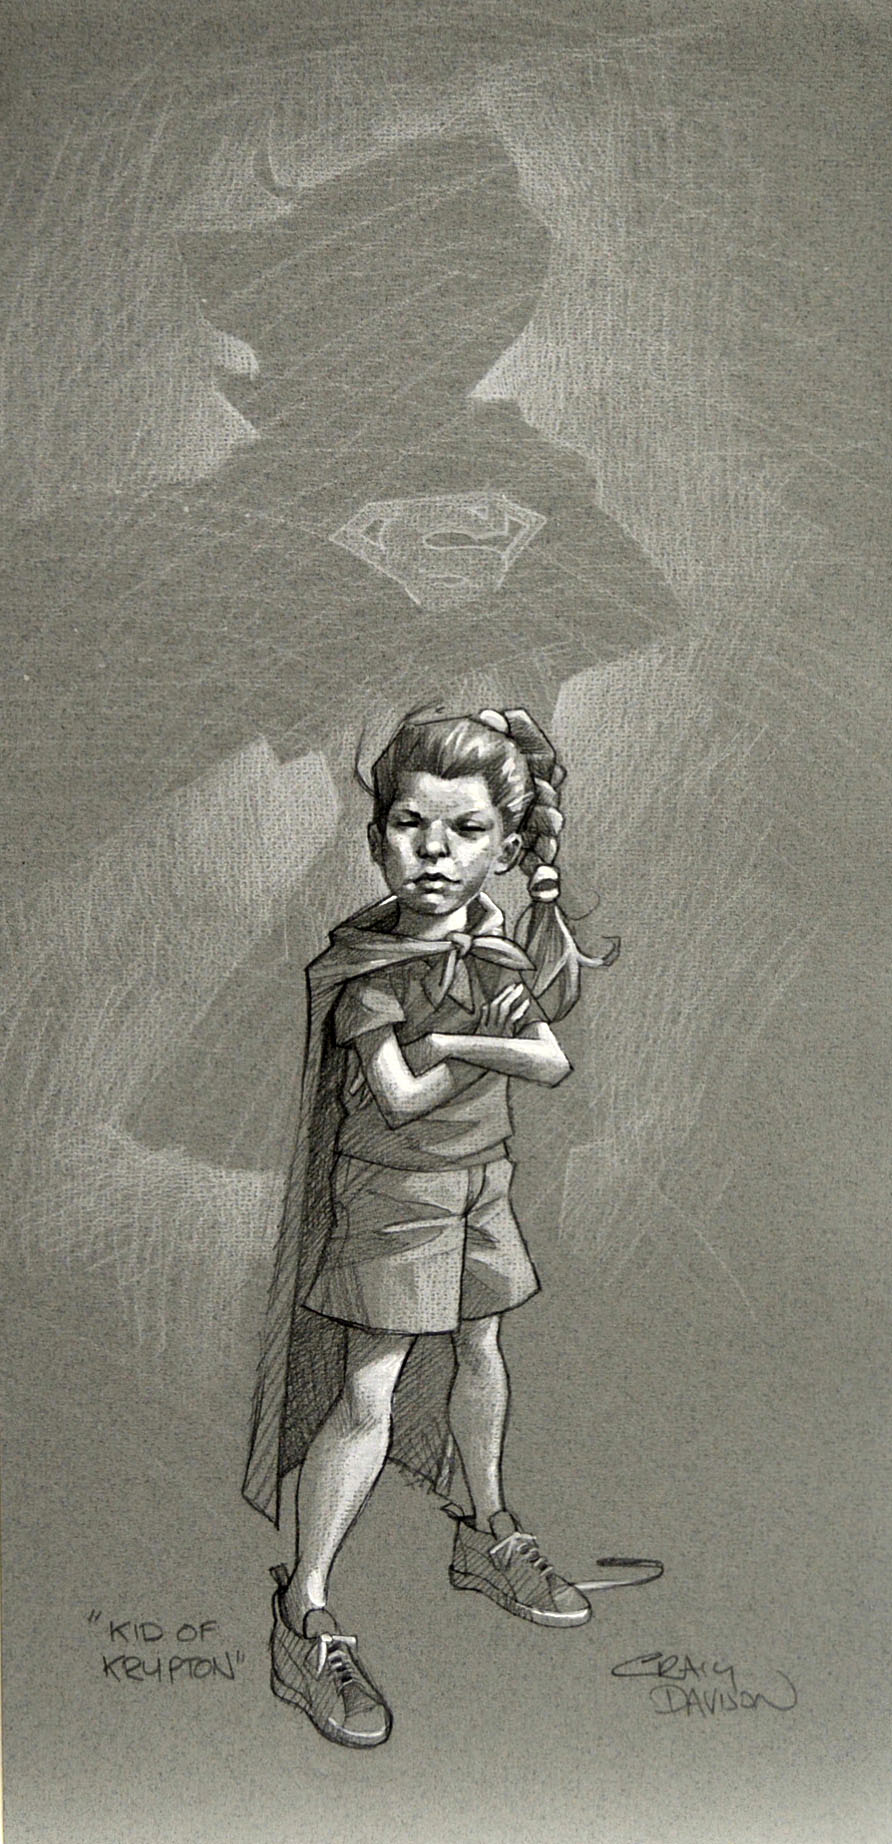 Kid of Krypton by Craig Davison, Nostalgic | Comic | Film | Children